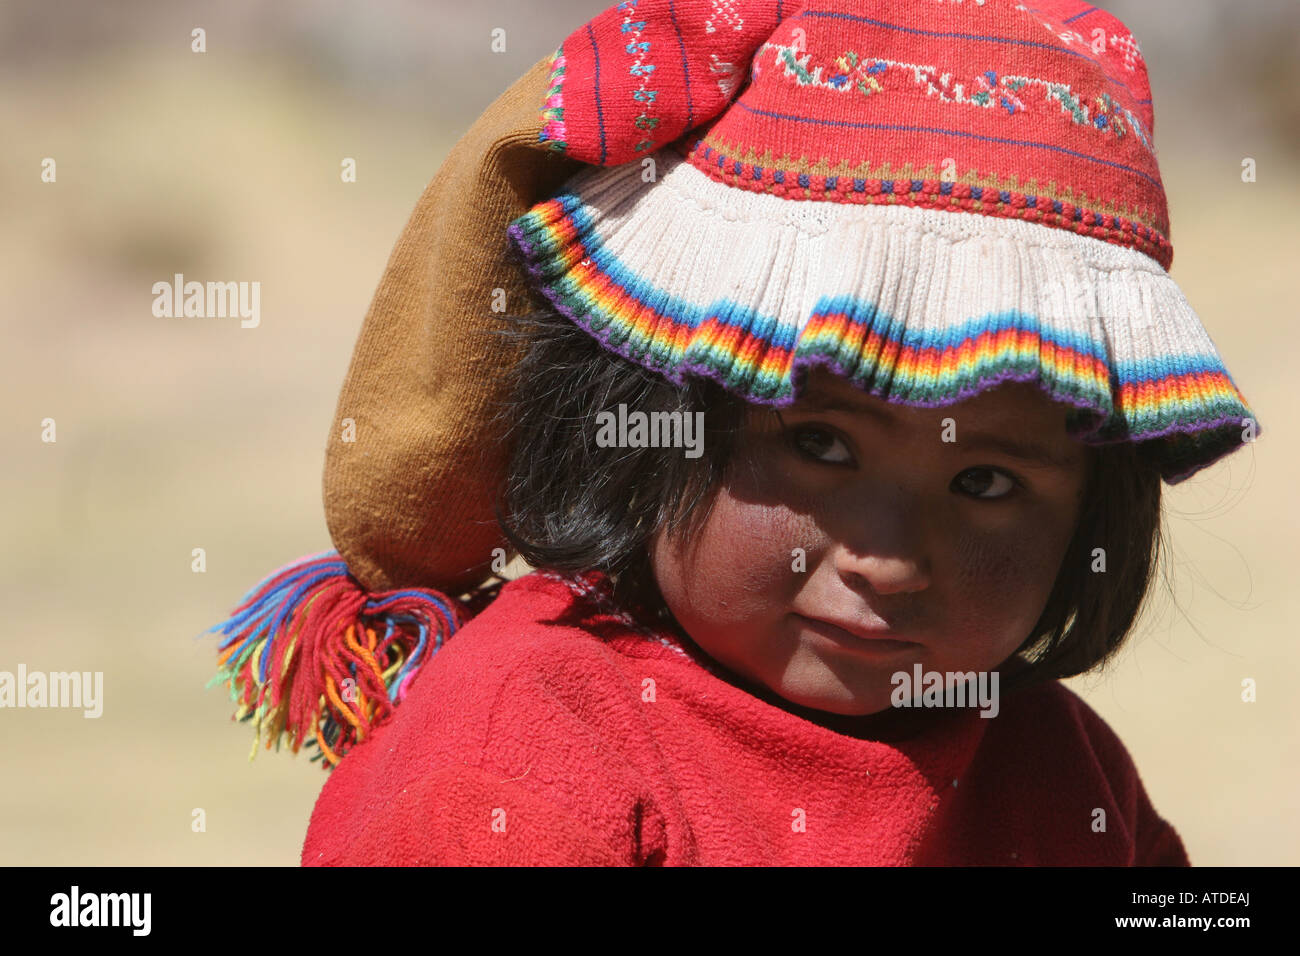 A young Peruvian child on Taquile Island Peru Stock Photo